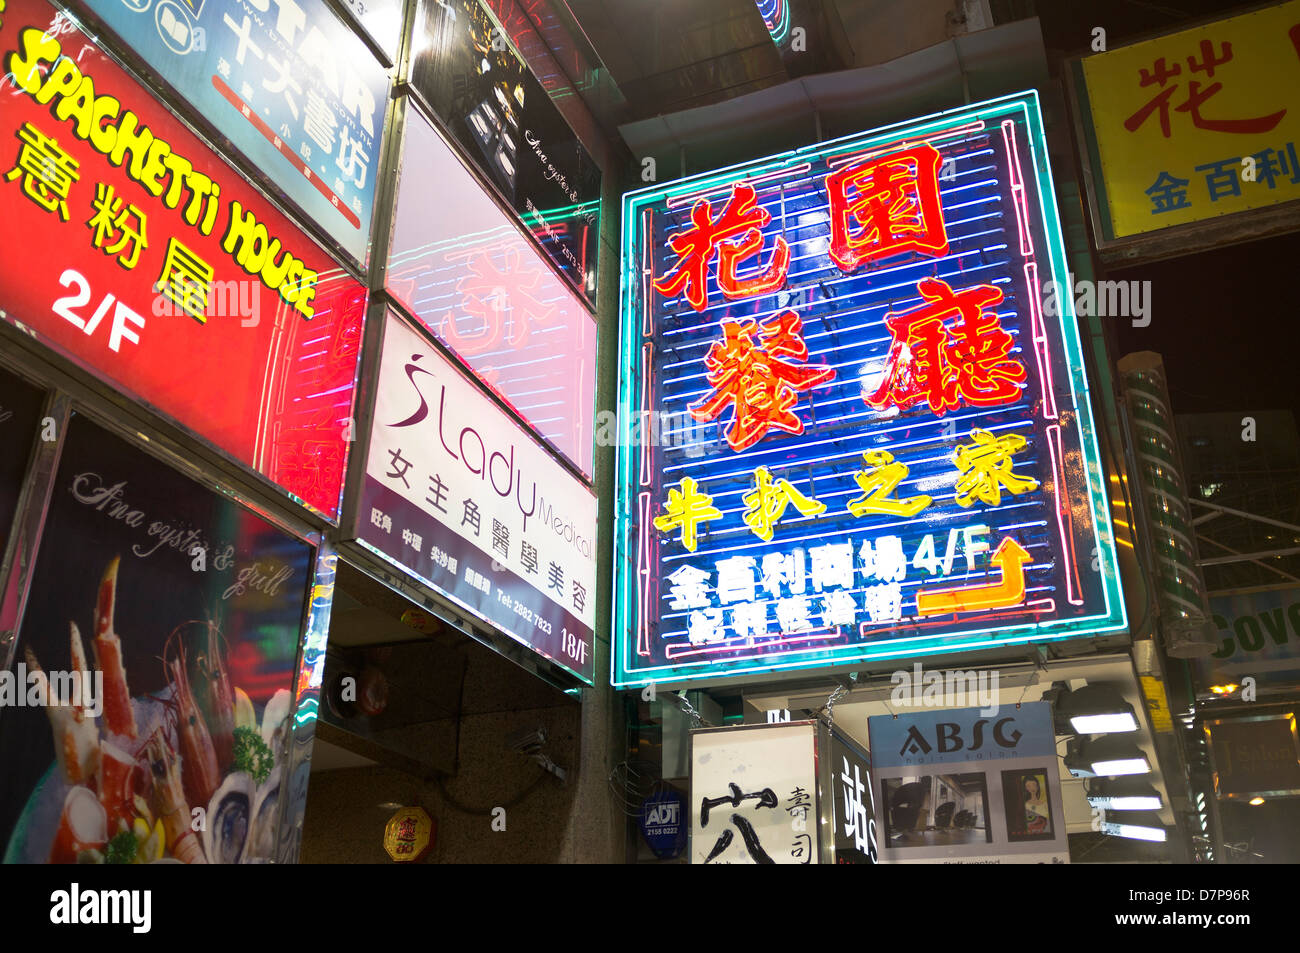 Dh Causeway Bay Hong Kong Chinese calligraphy lumières néons publicitaires hong kong at night Banque D'Images